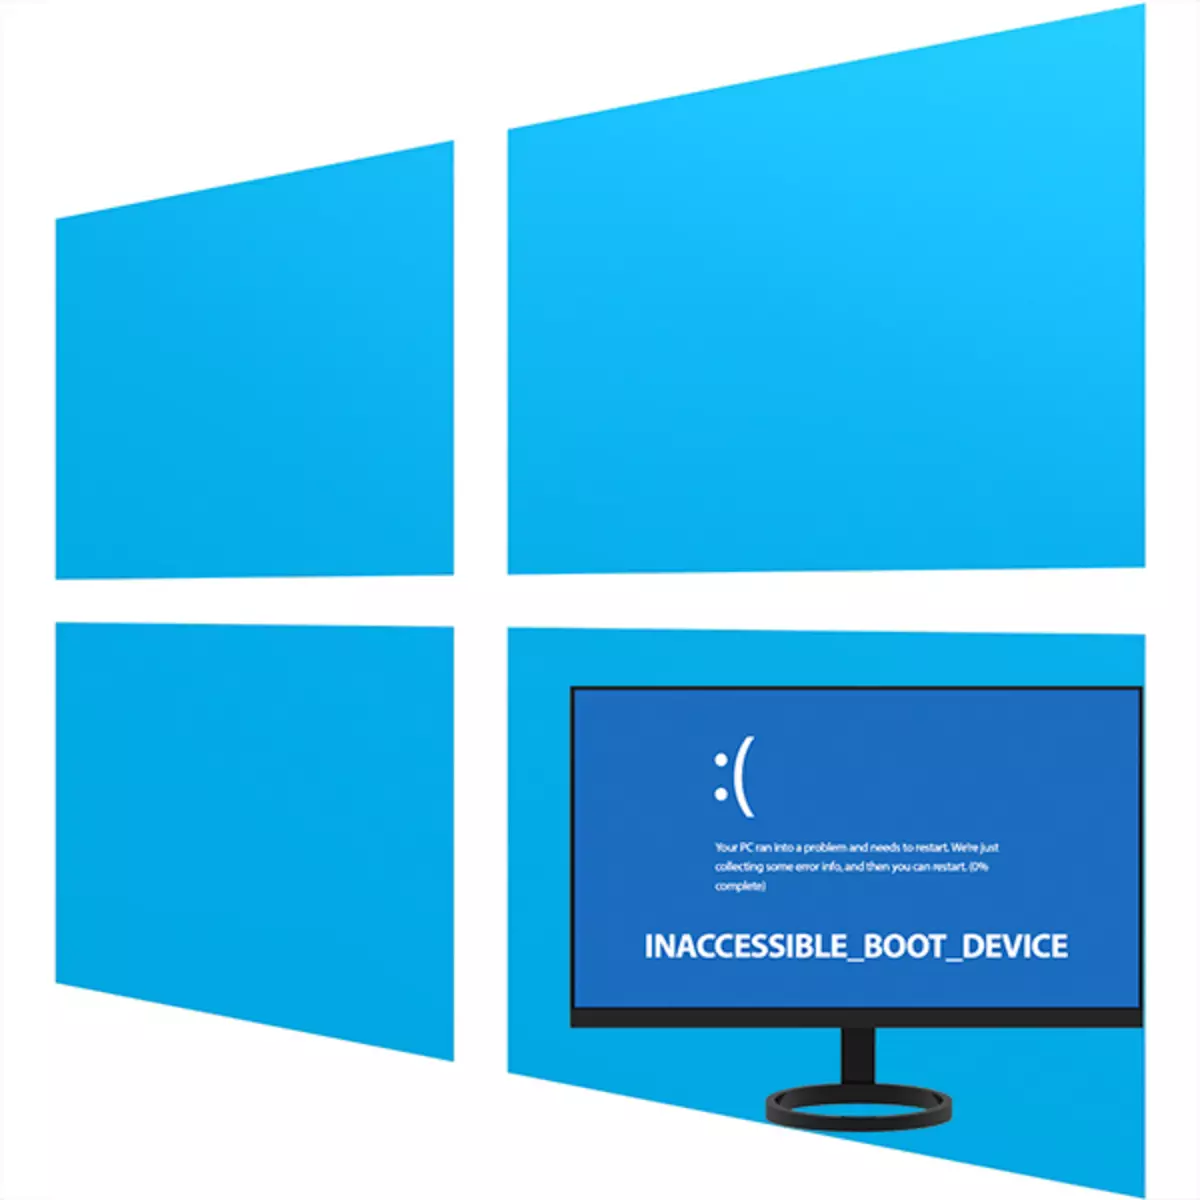 引導Windows 10時出錯“incaccessible_boot_device”